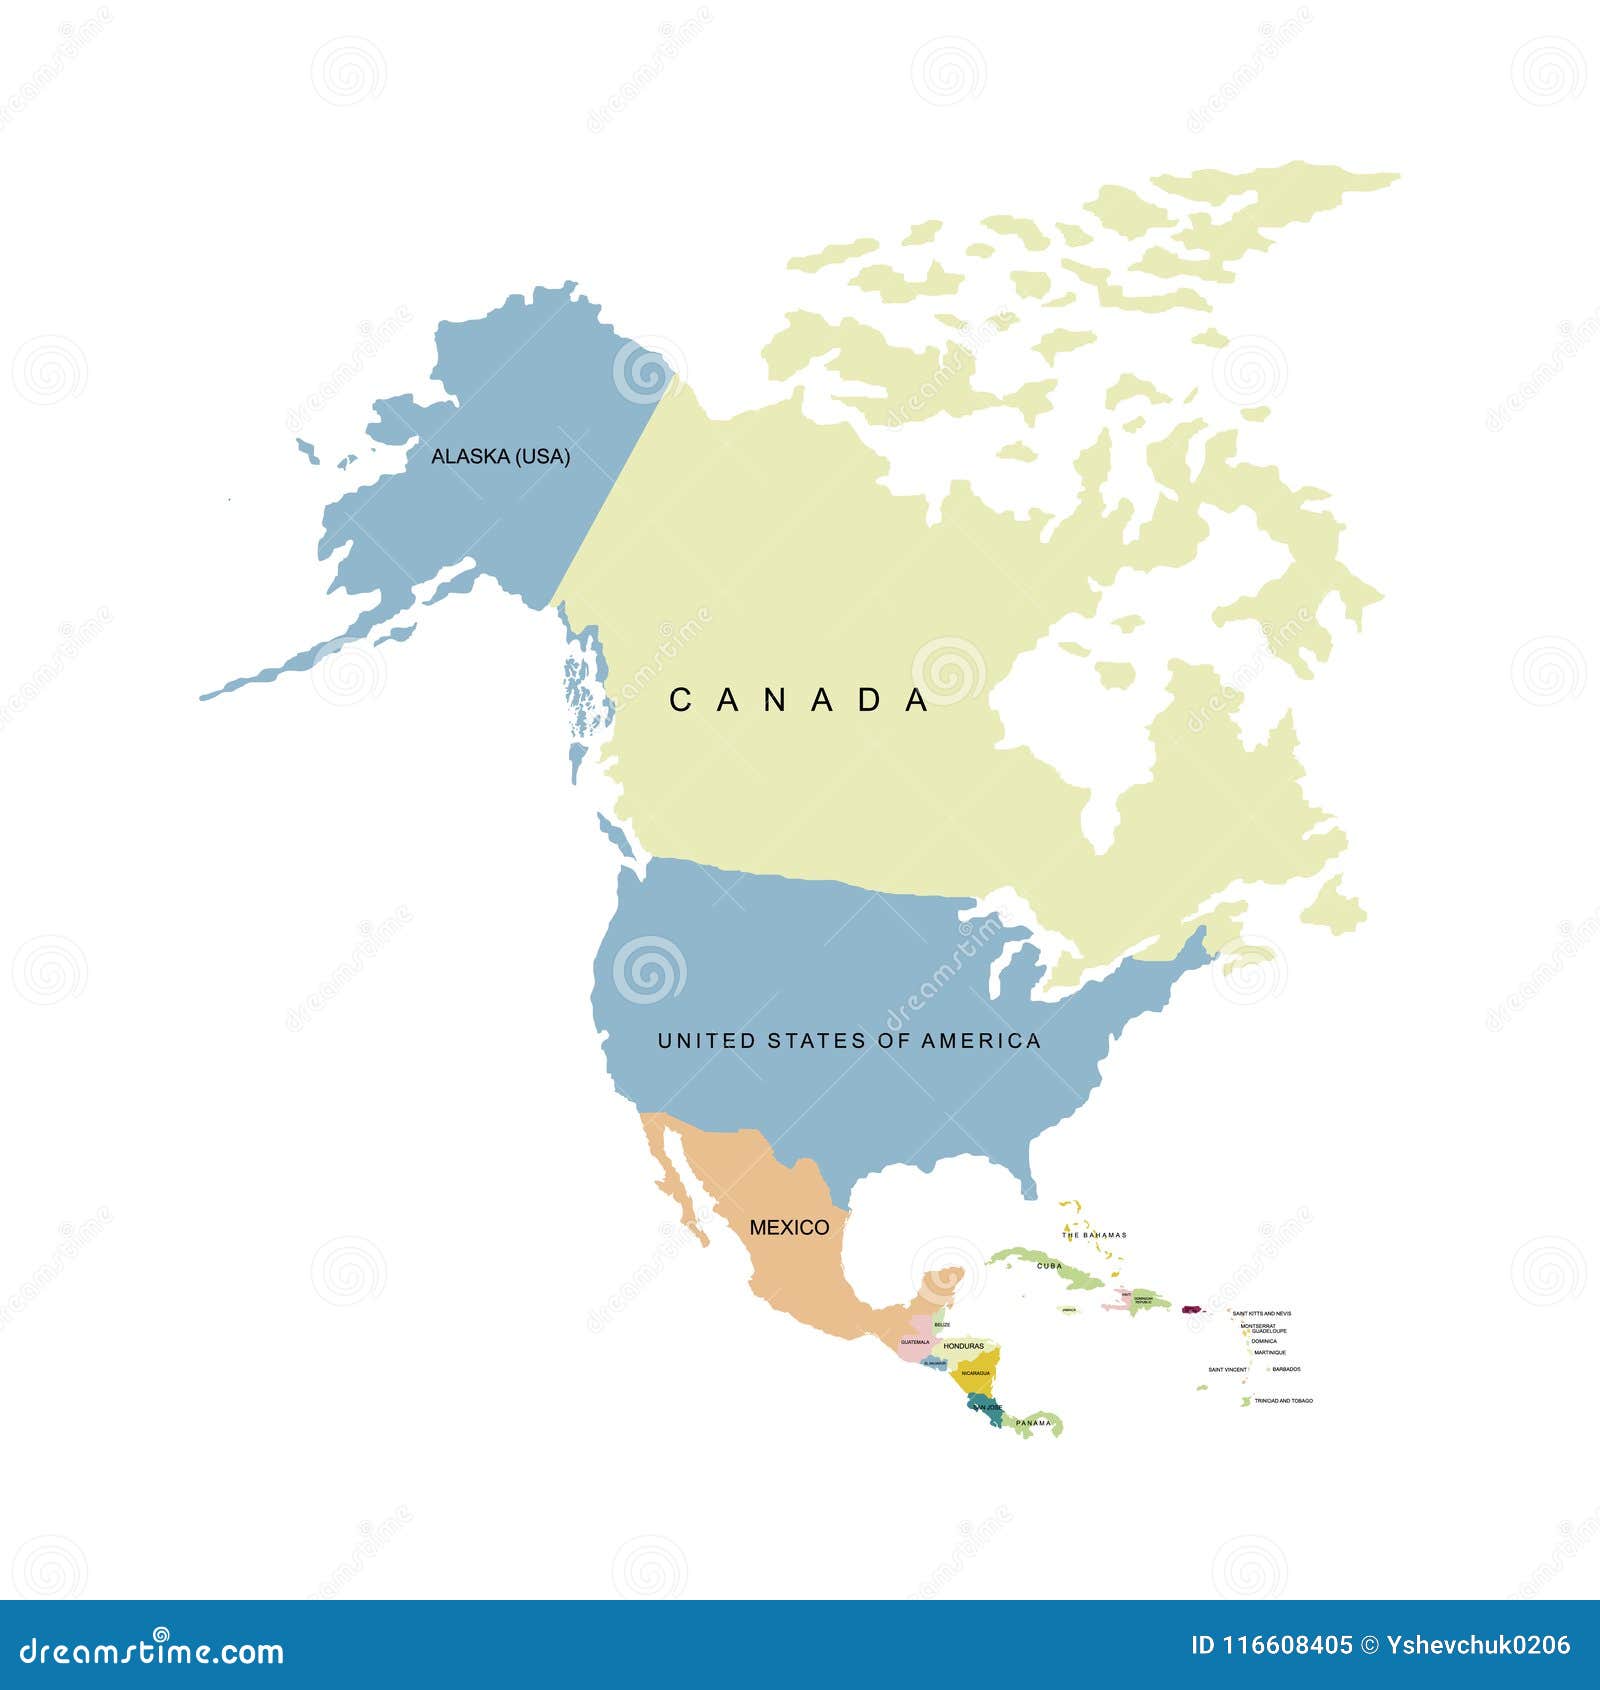 Канадский на карте северной америки. США Канада Мексика на карте. США Канада Мексика на контурной карте. Северная Америка Канада США Мексика. Канада на карте Северной Америки.